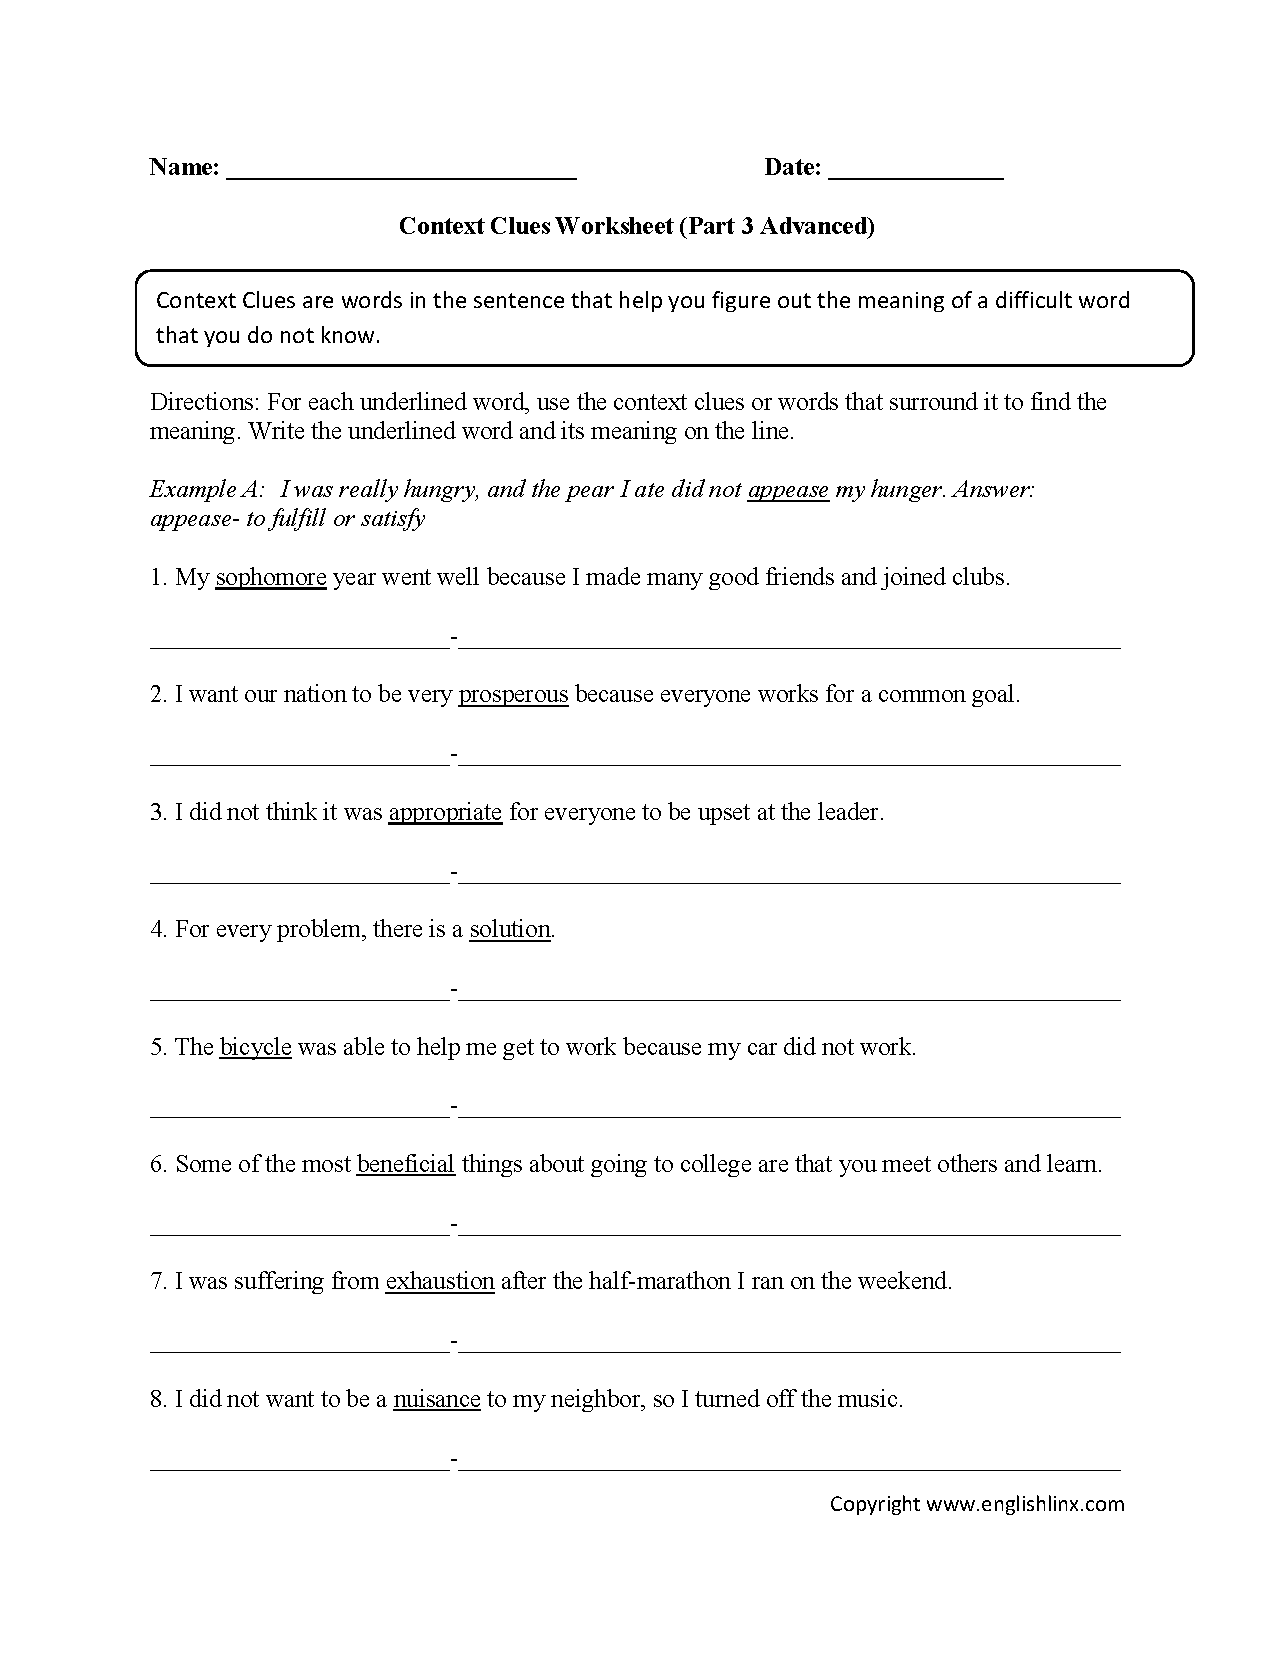 Context Clues Worksheets Advanced Part 3